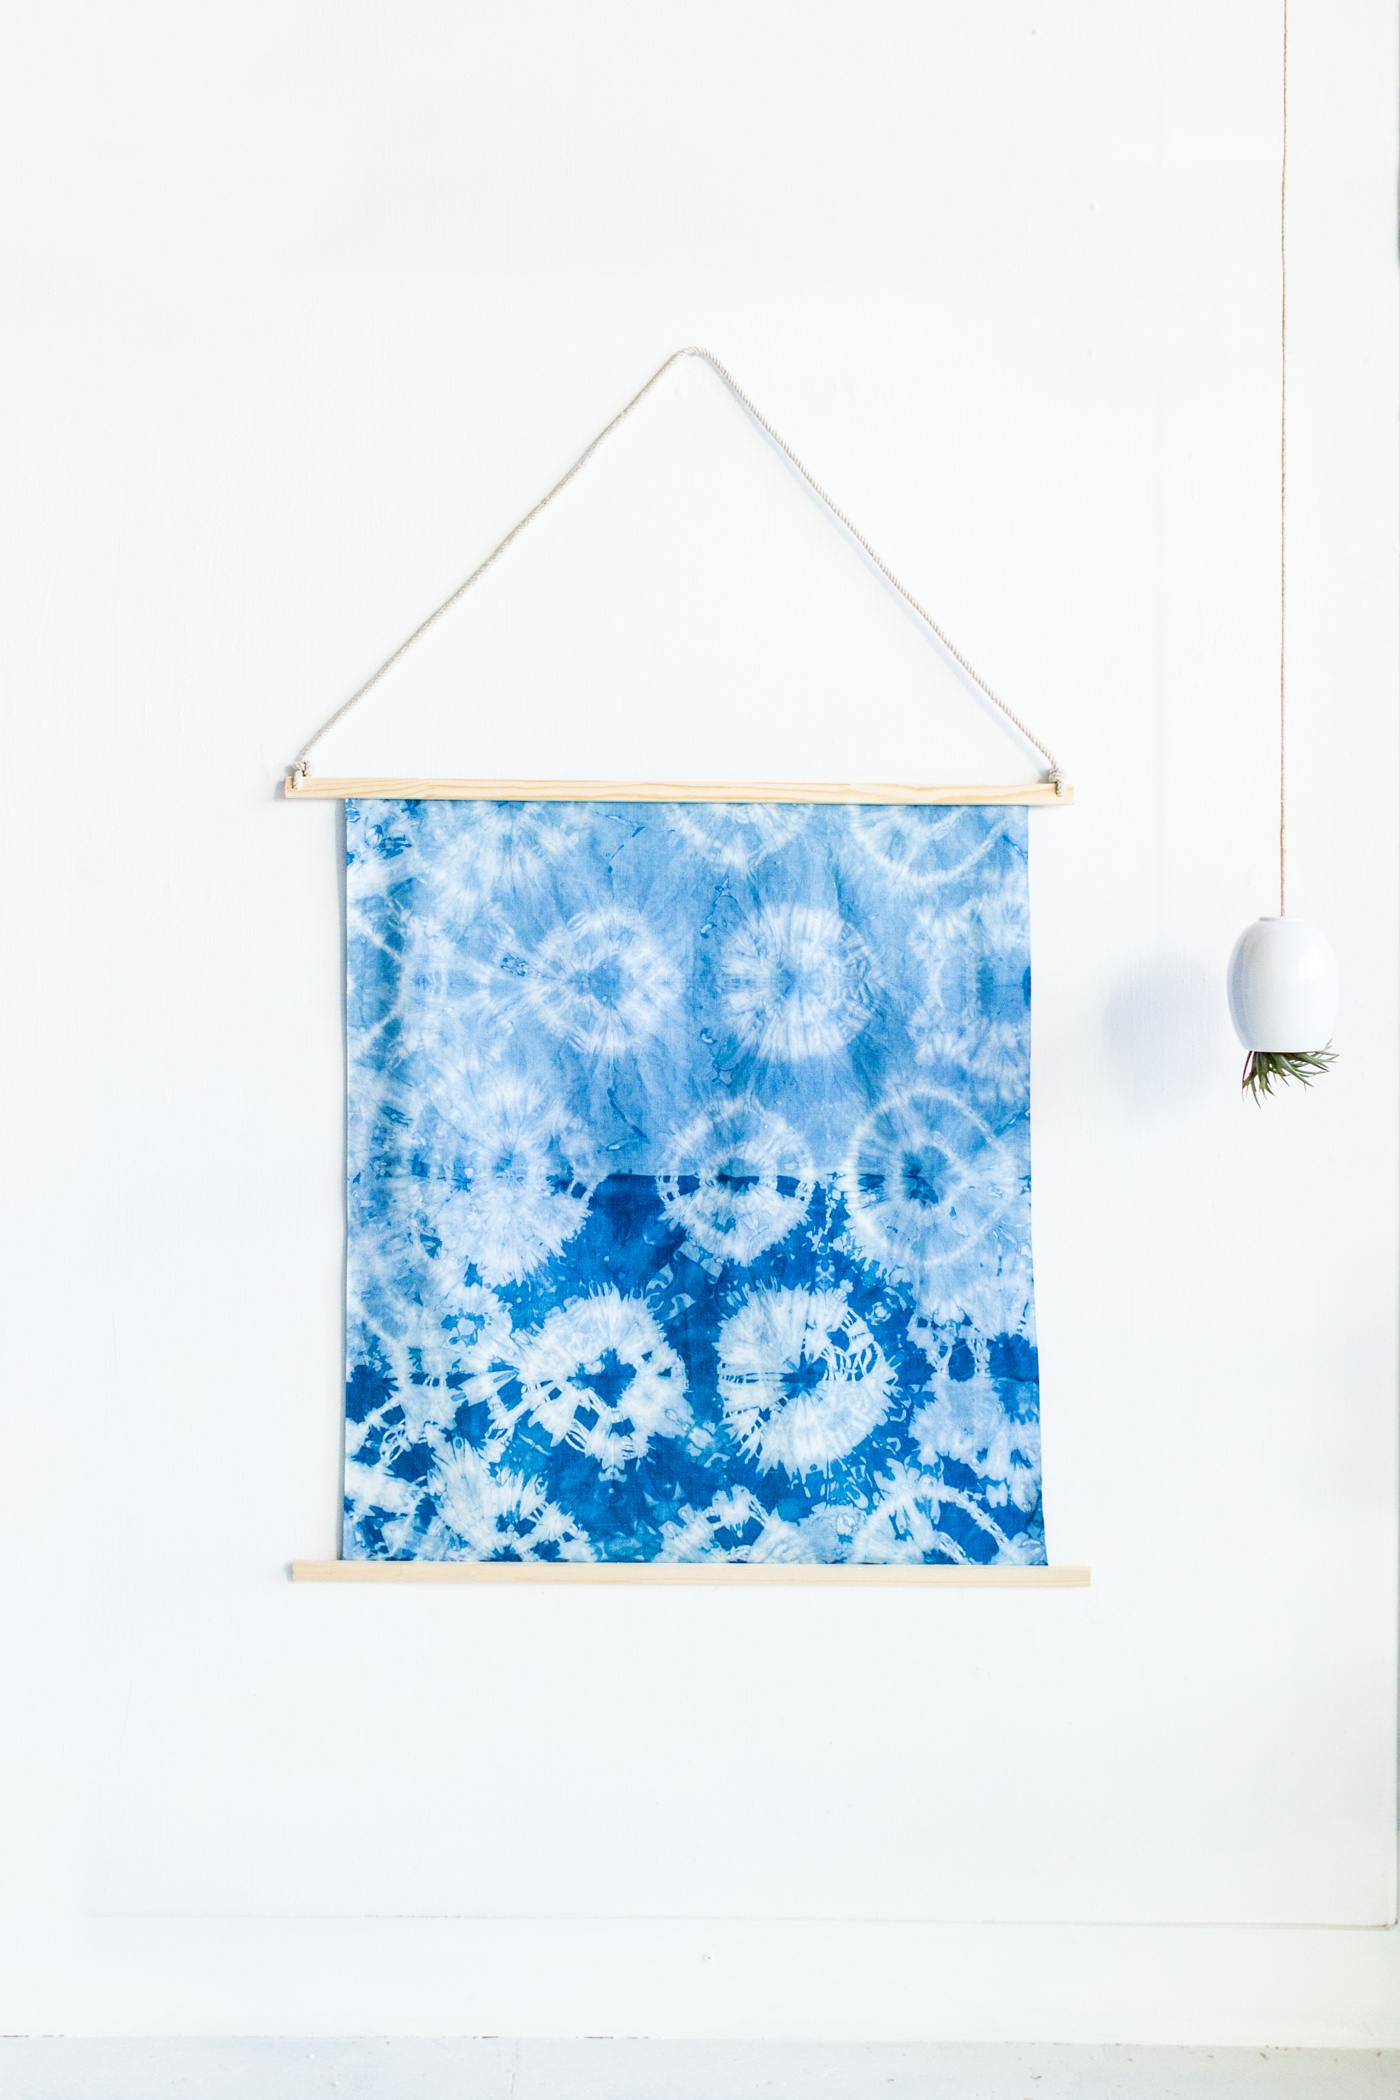 DIY Easy Wall Hanging to Frame a Shibori Fabric Piece